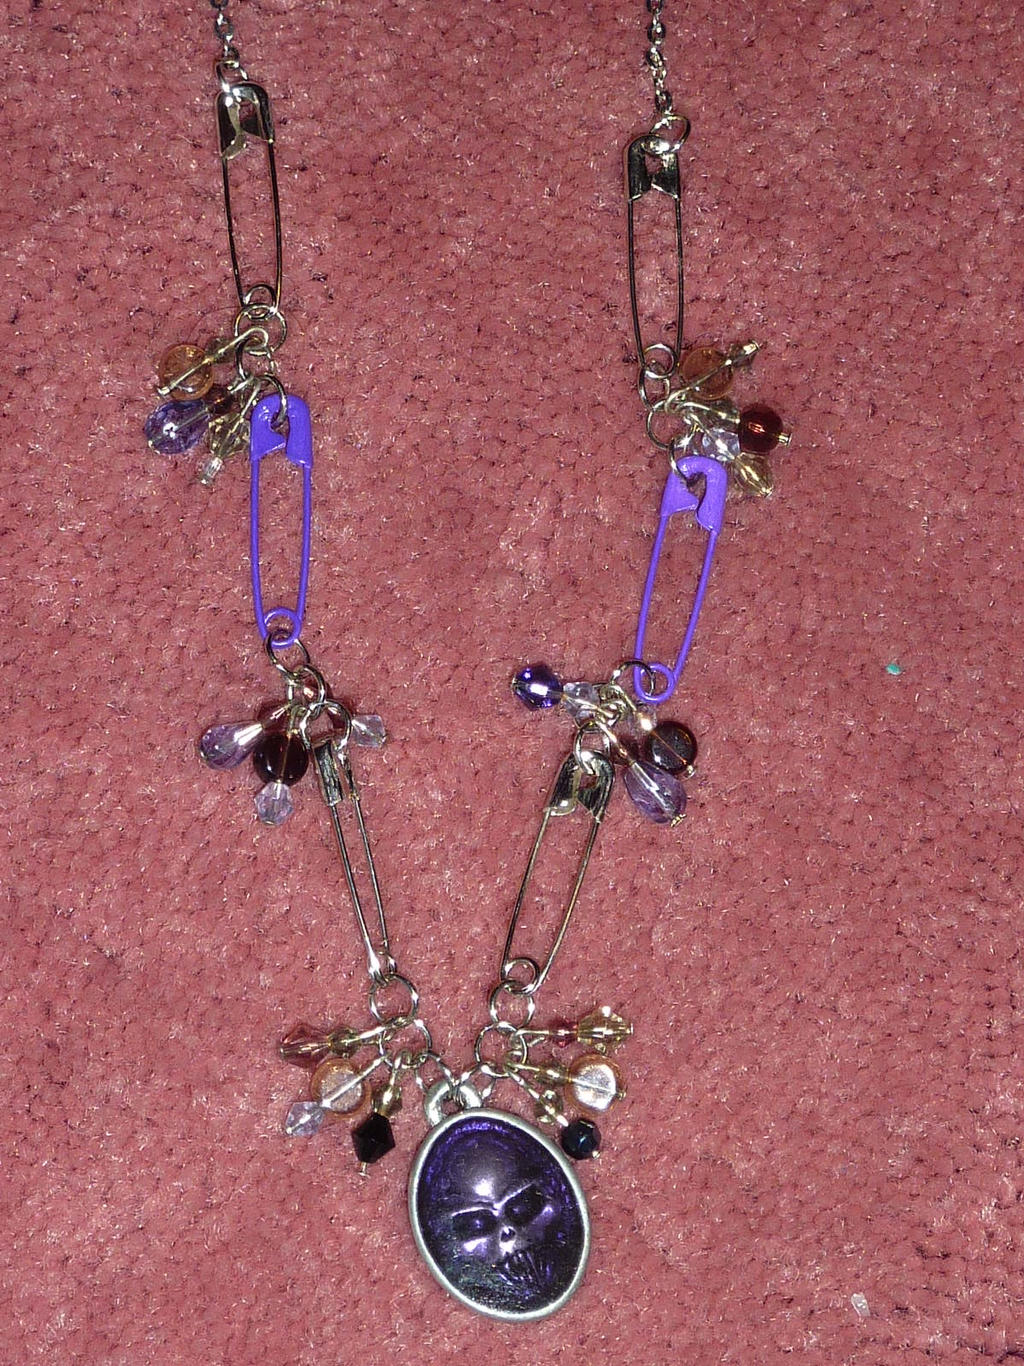 Purple skull safety pins